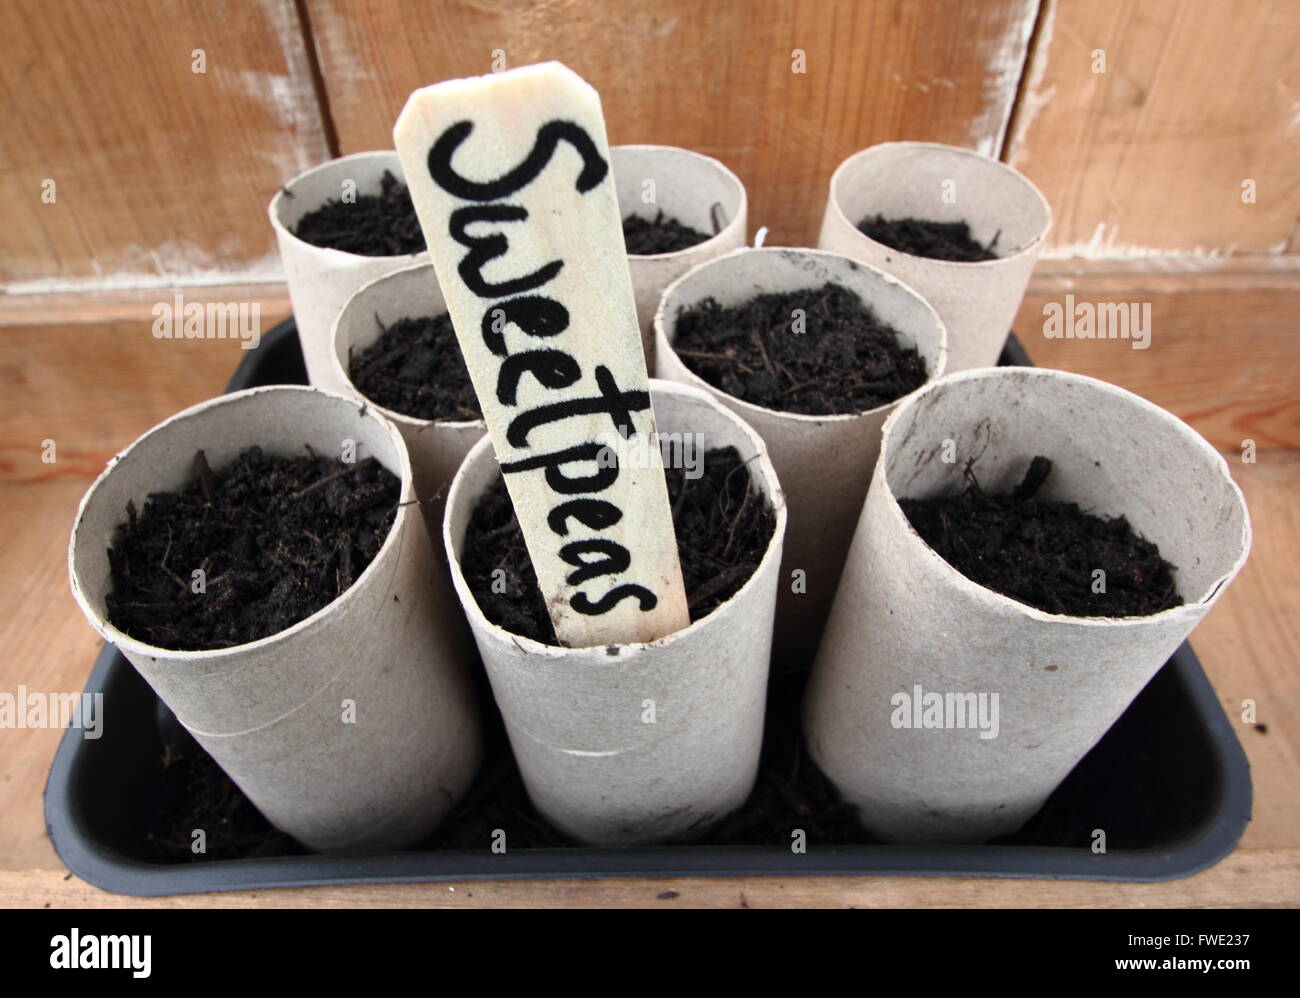 Sweetpea seeds (Spencer variety) sown in cardboard toilet roll inners, England UK Stock Photo